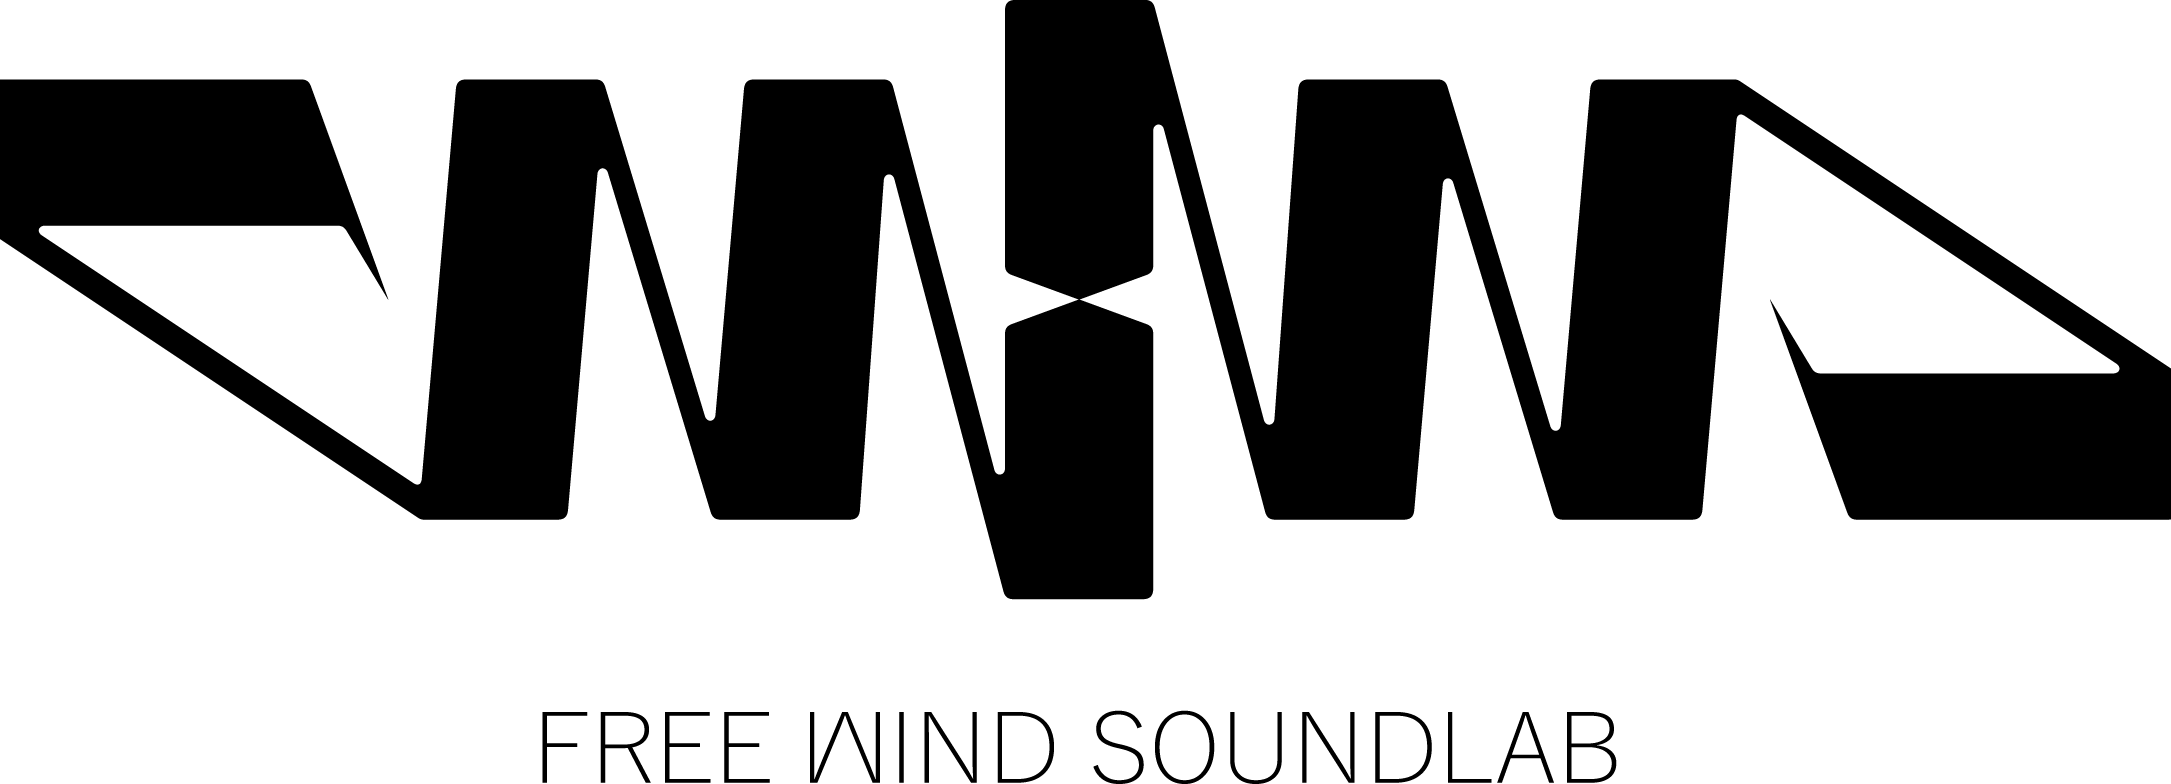 Free Wind Soundlab